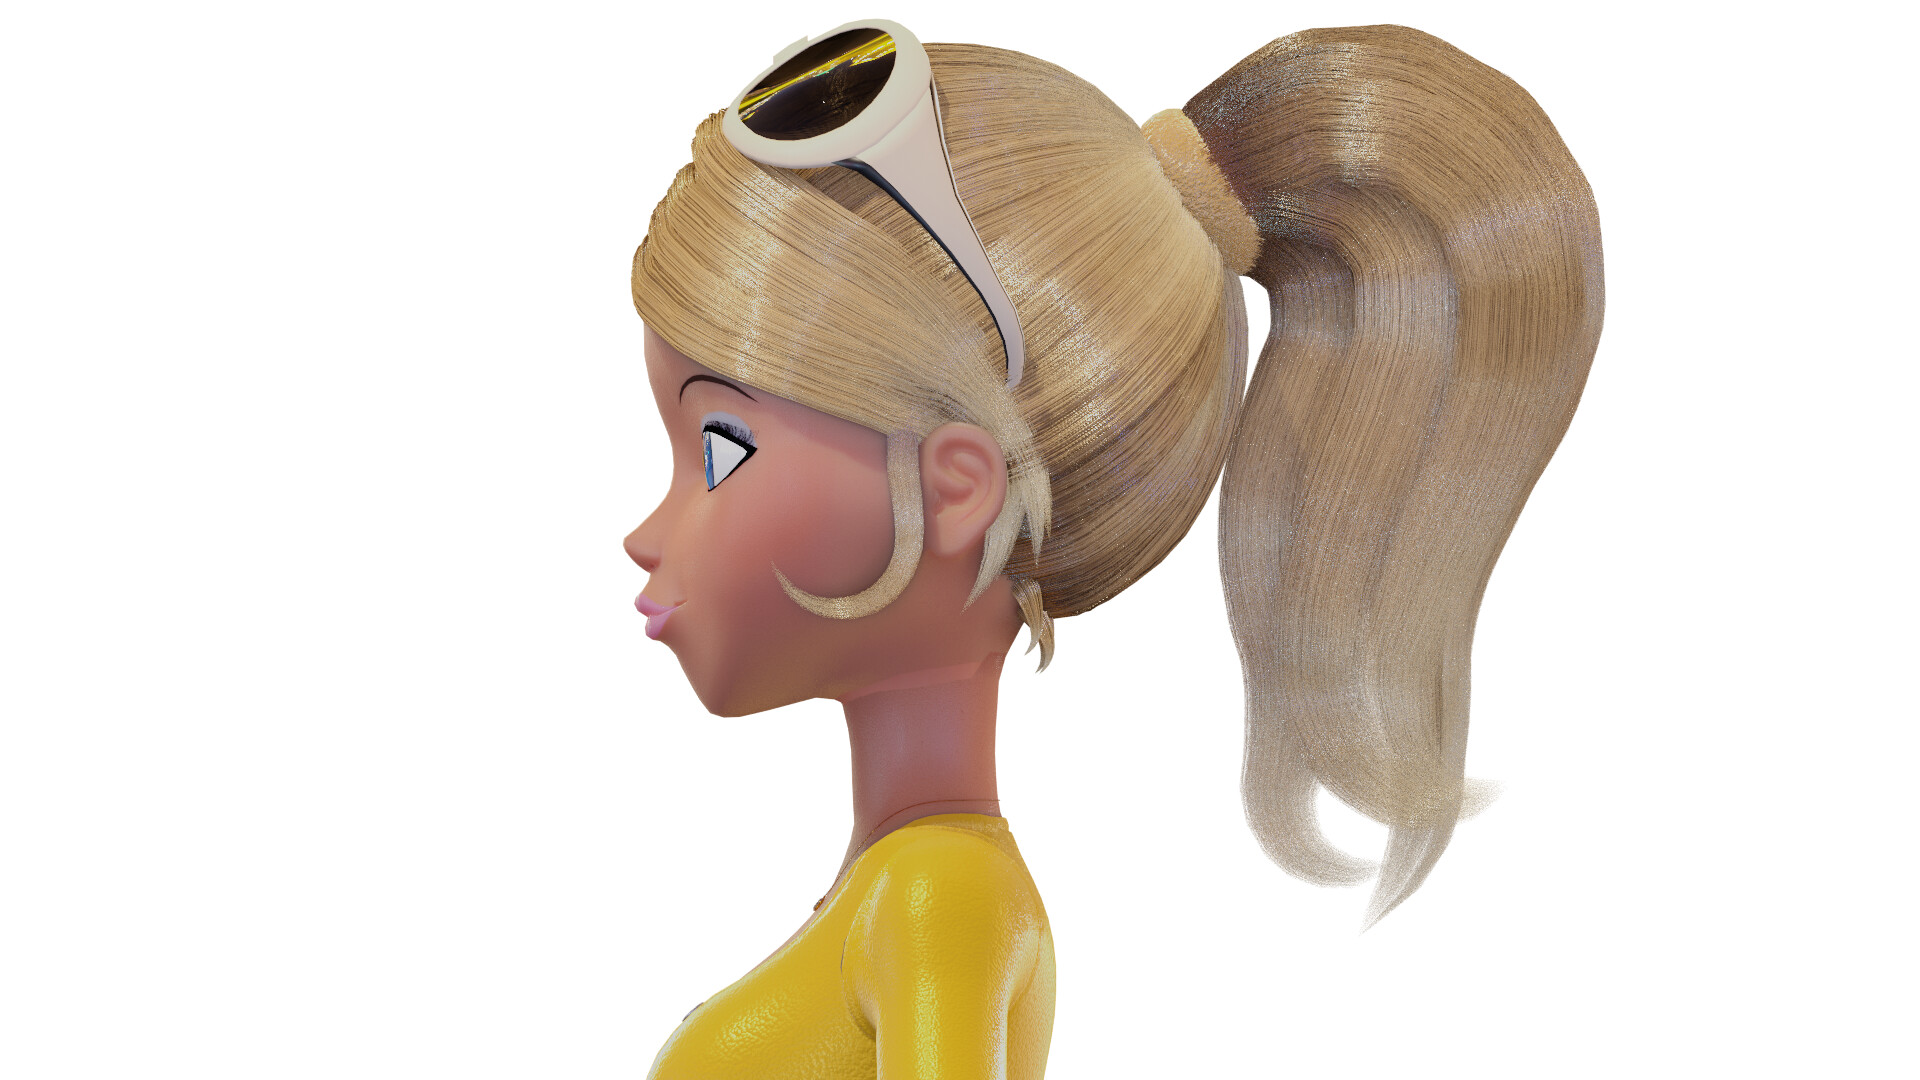 ArtStation - Miraculous - Meu Modelo em 3D da personagem Chloé Bourgeois de  Miraculous Ladybug